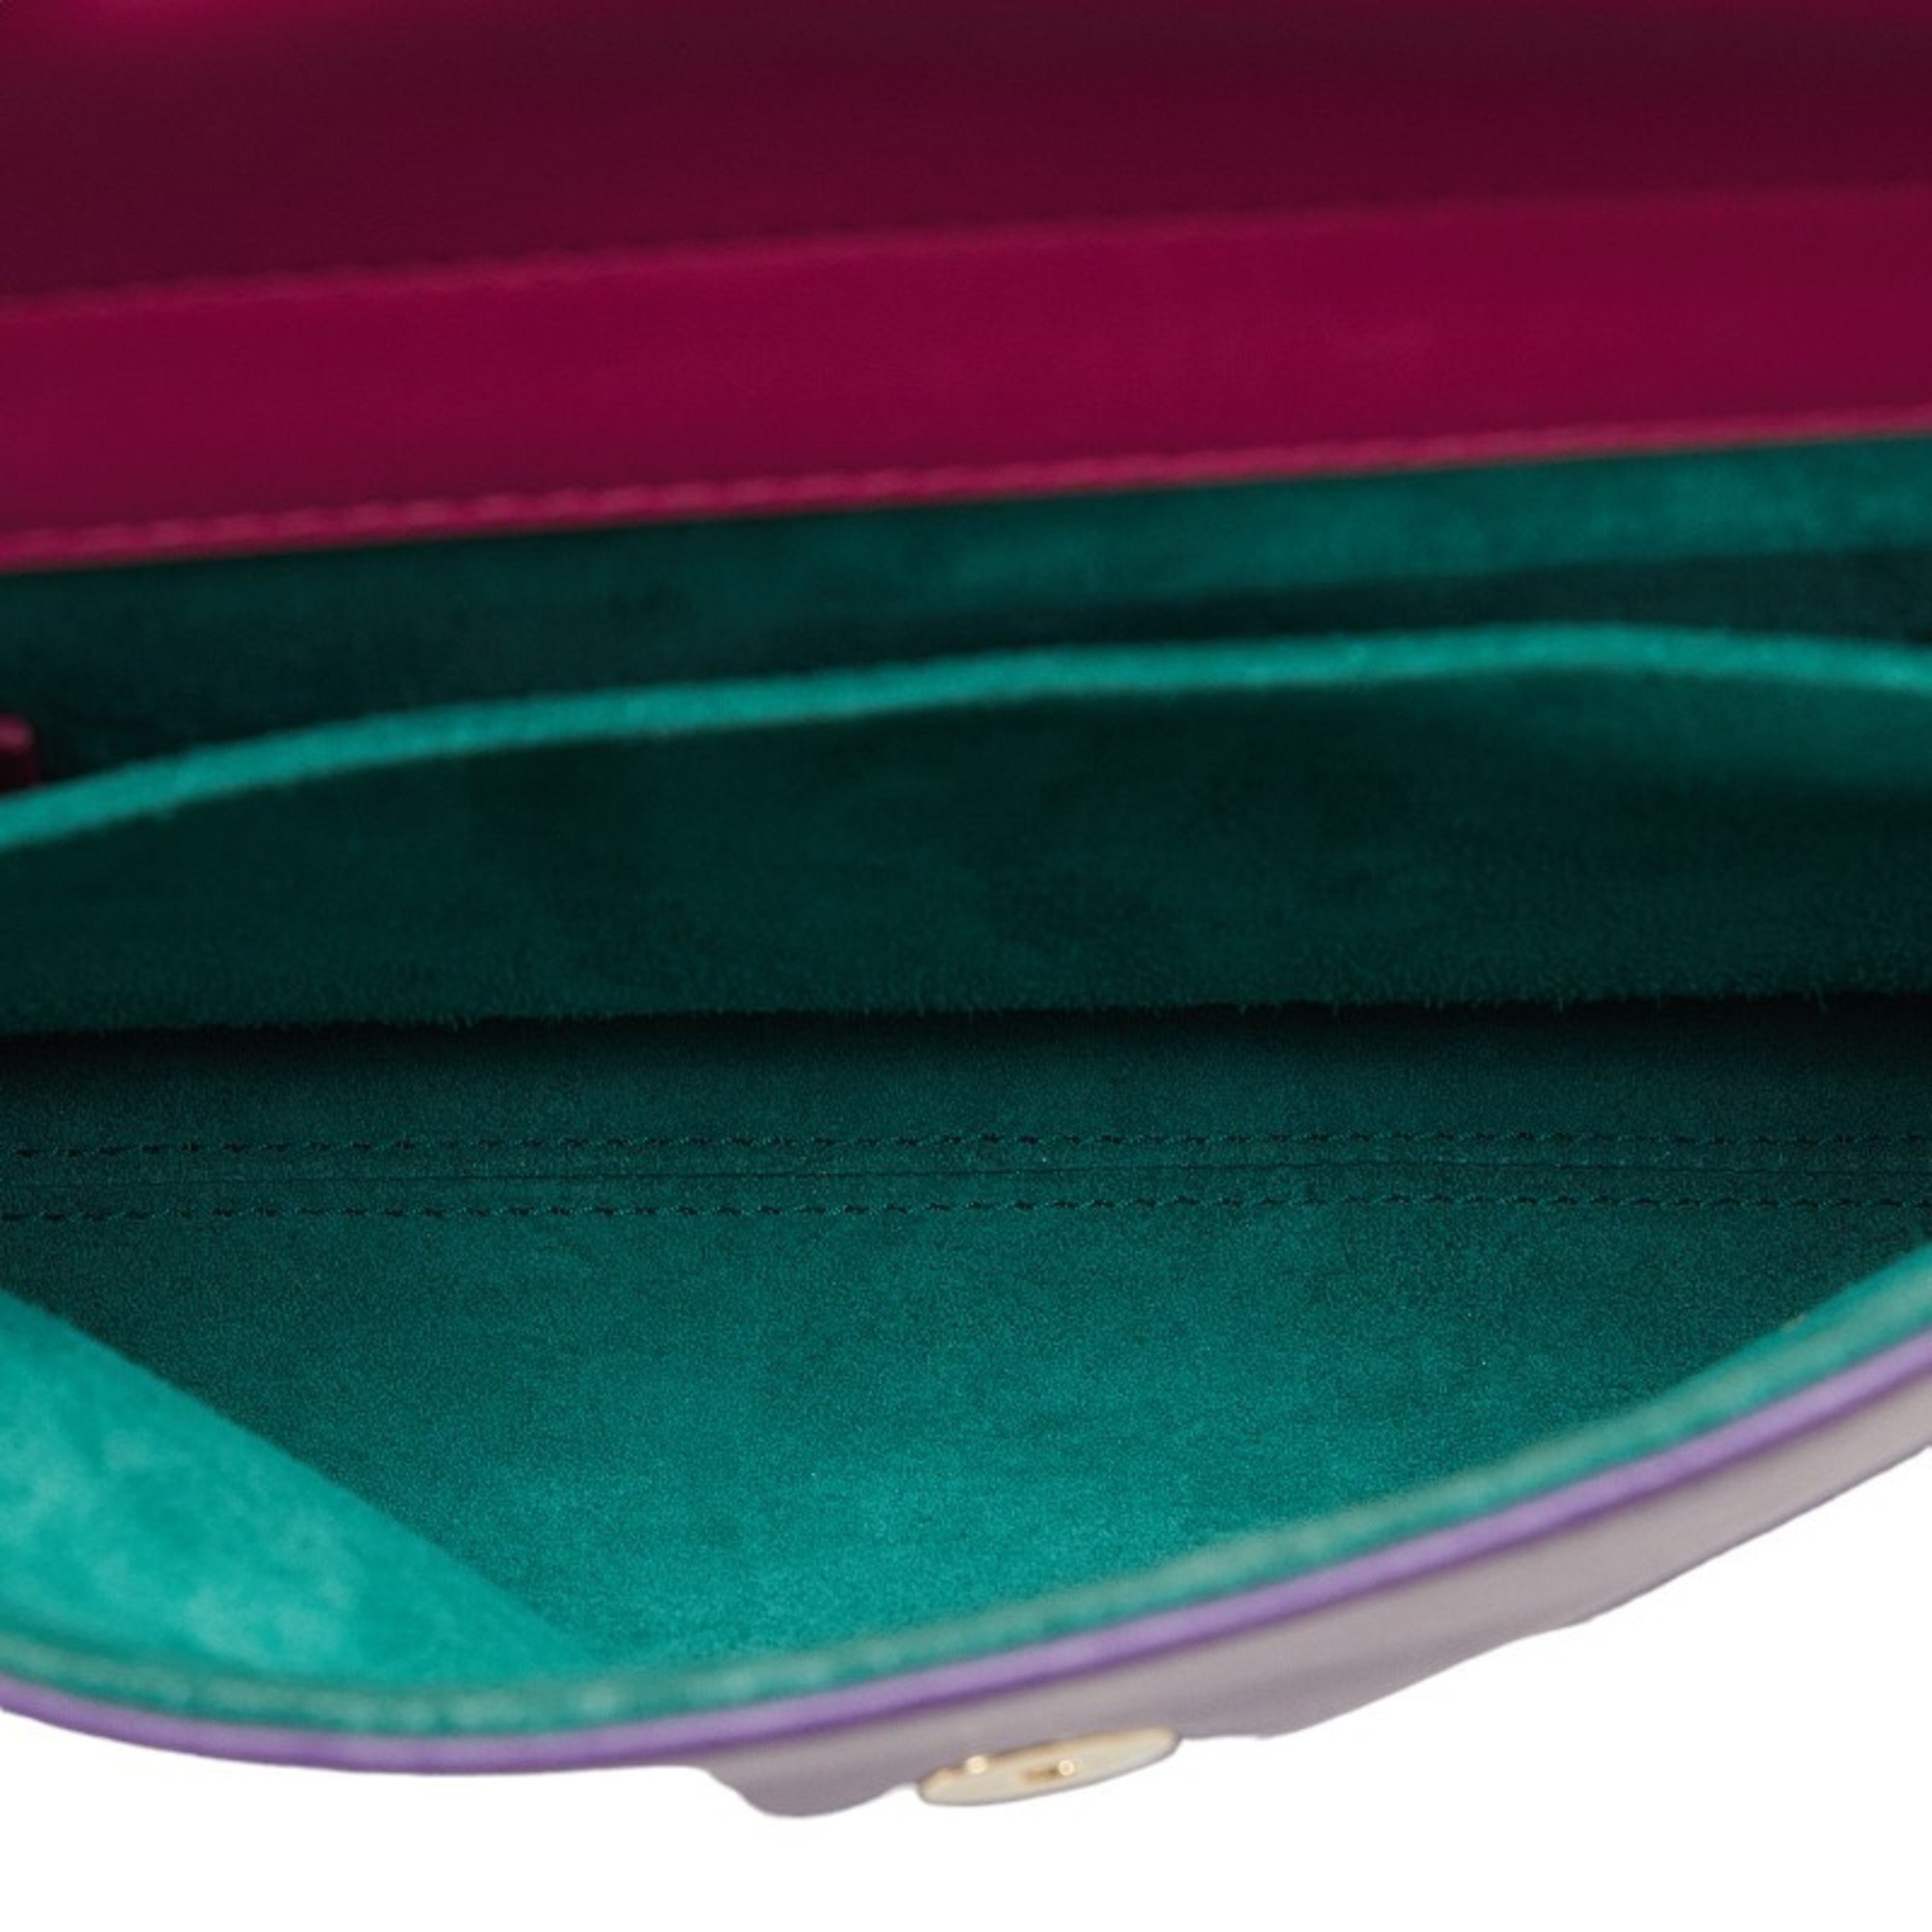 BVLGARI Duet Handbag 281057 Pink Purple Leather Ladies